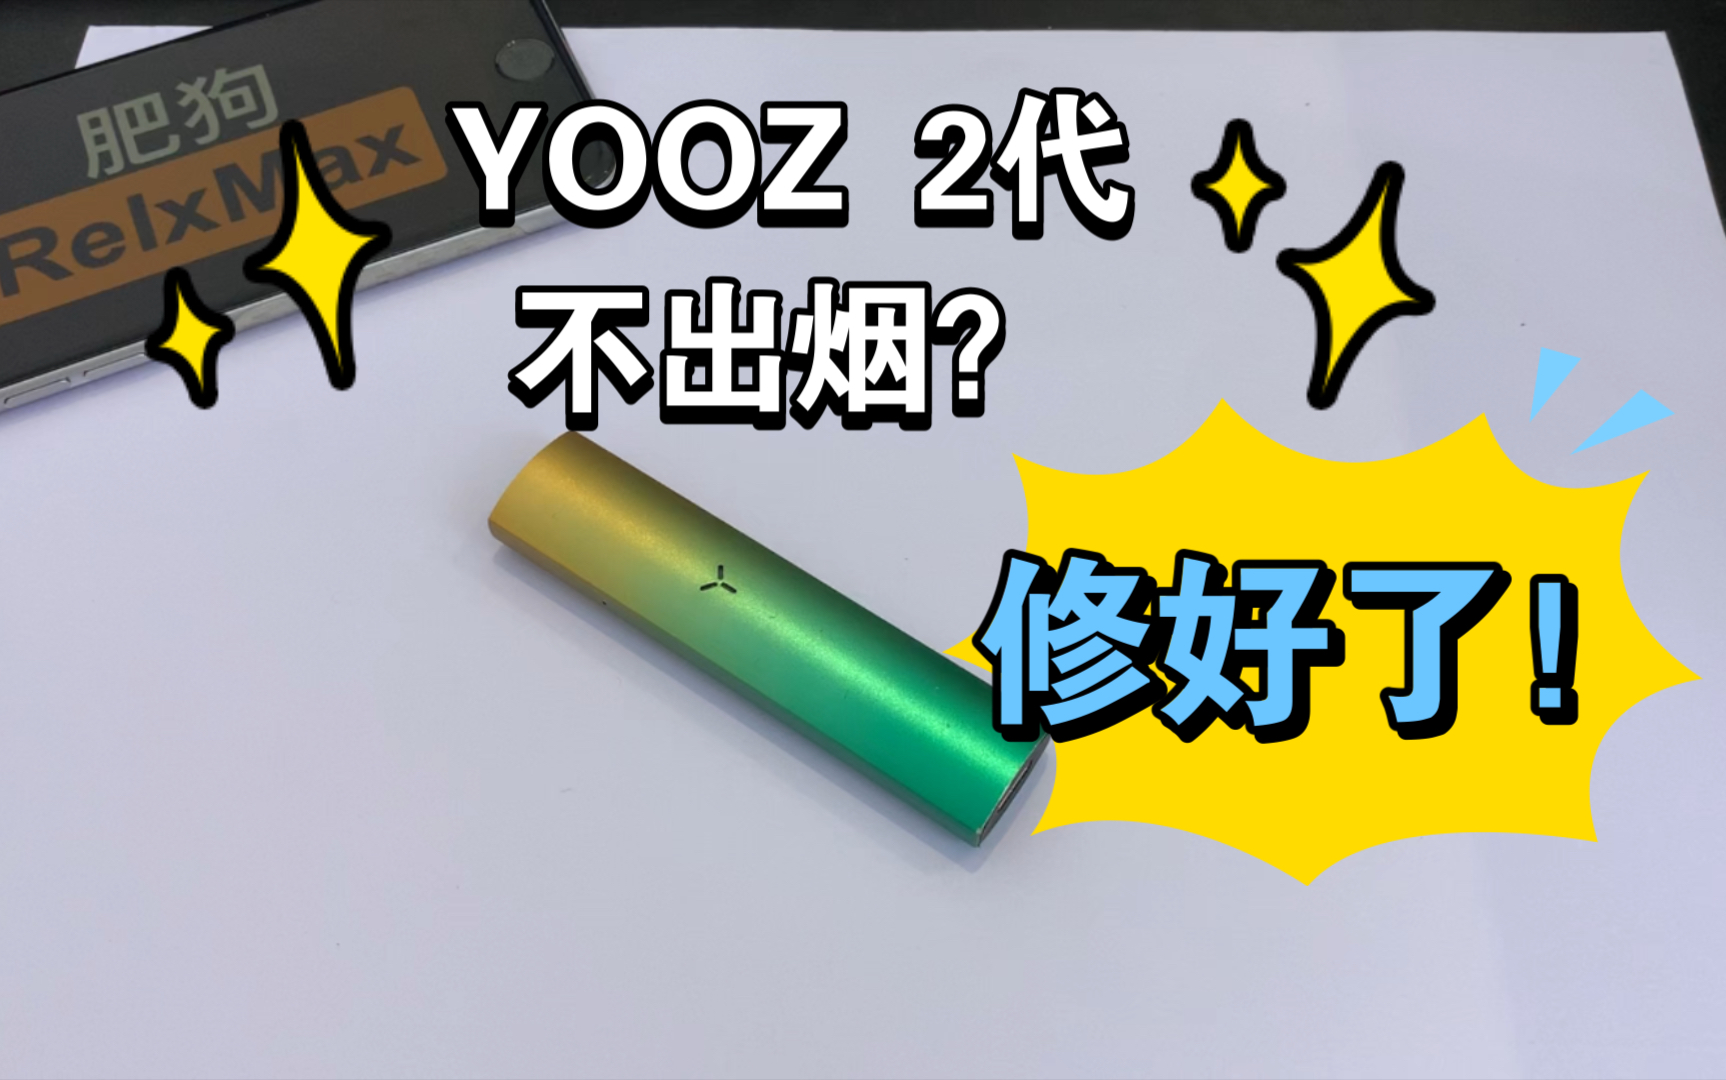 yooz单杆官网价格yooz单杆是不是假的-第1张图片-电子烟烟油论坛